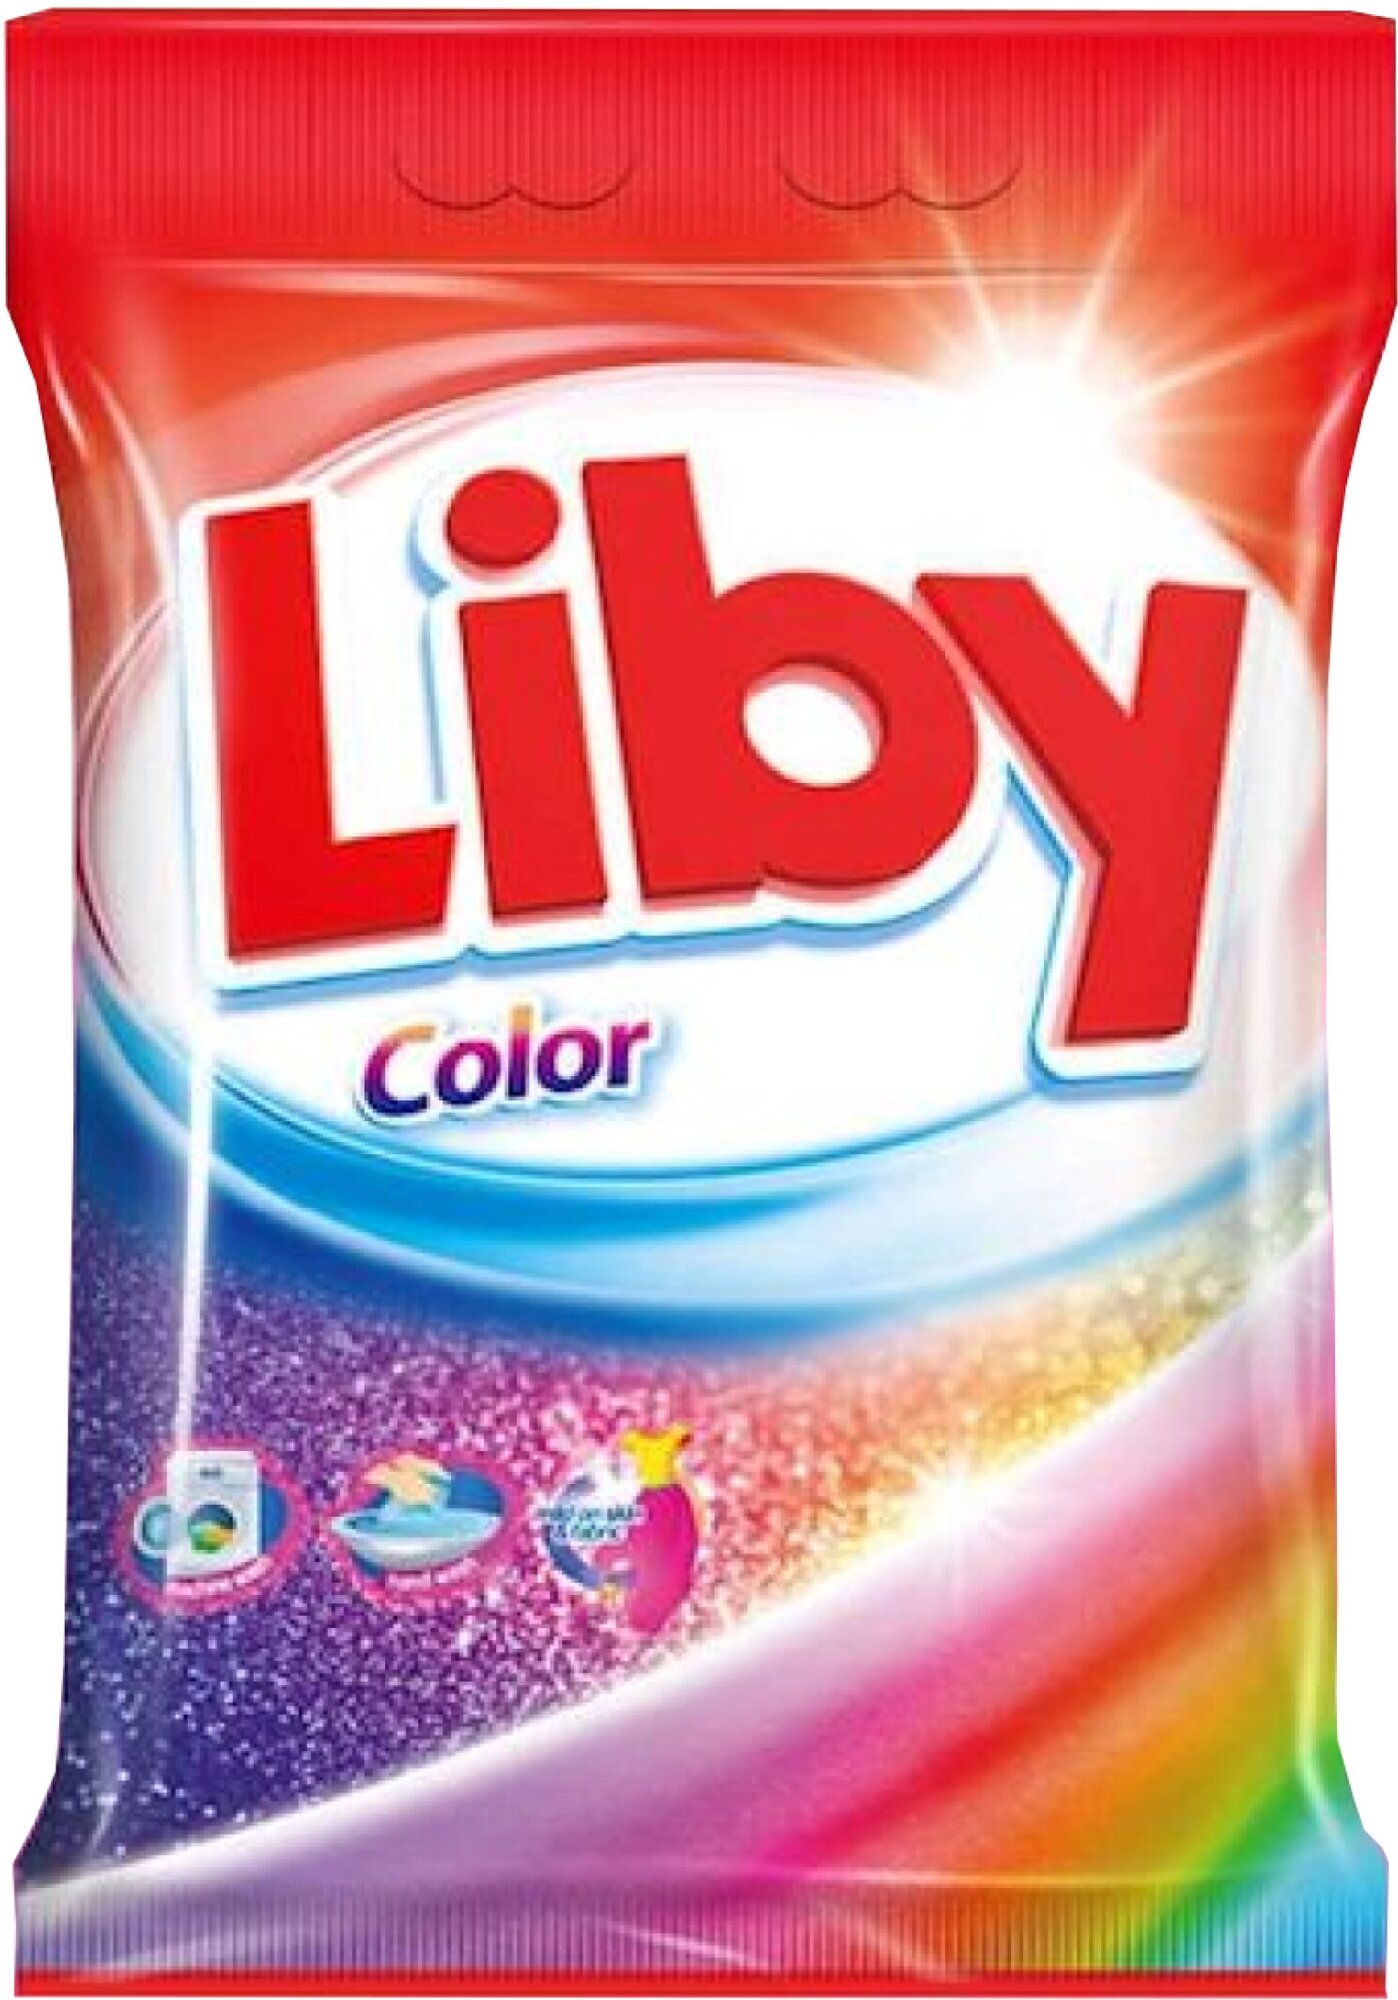   Liby - Color, 1 